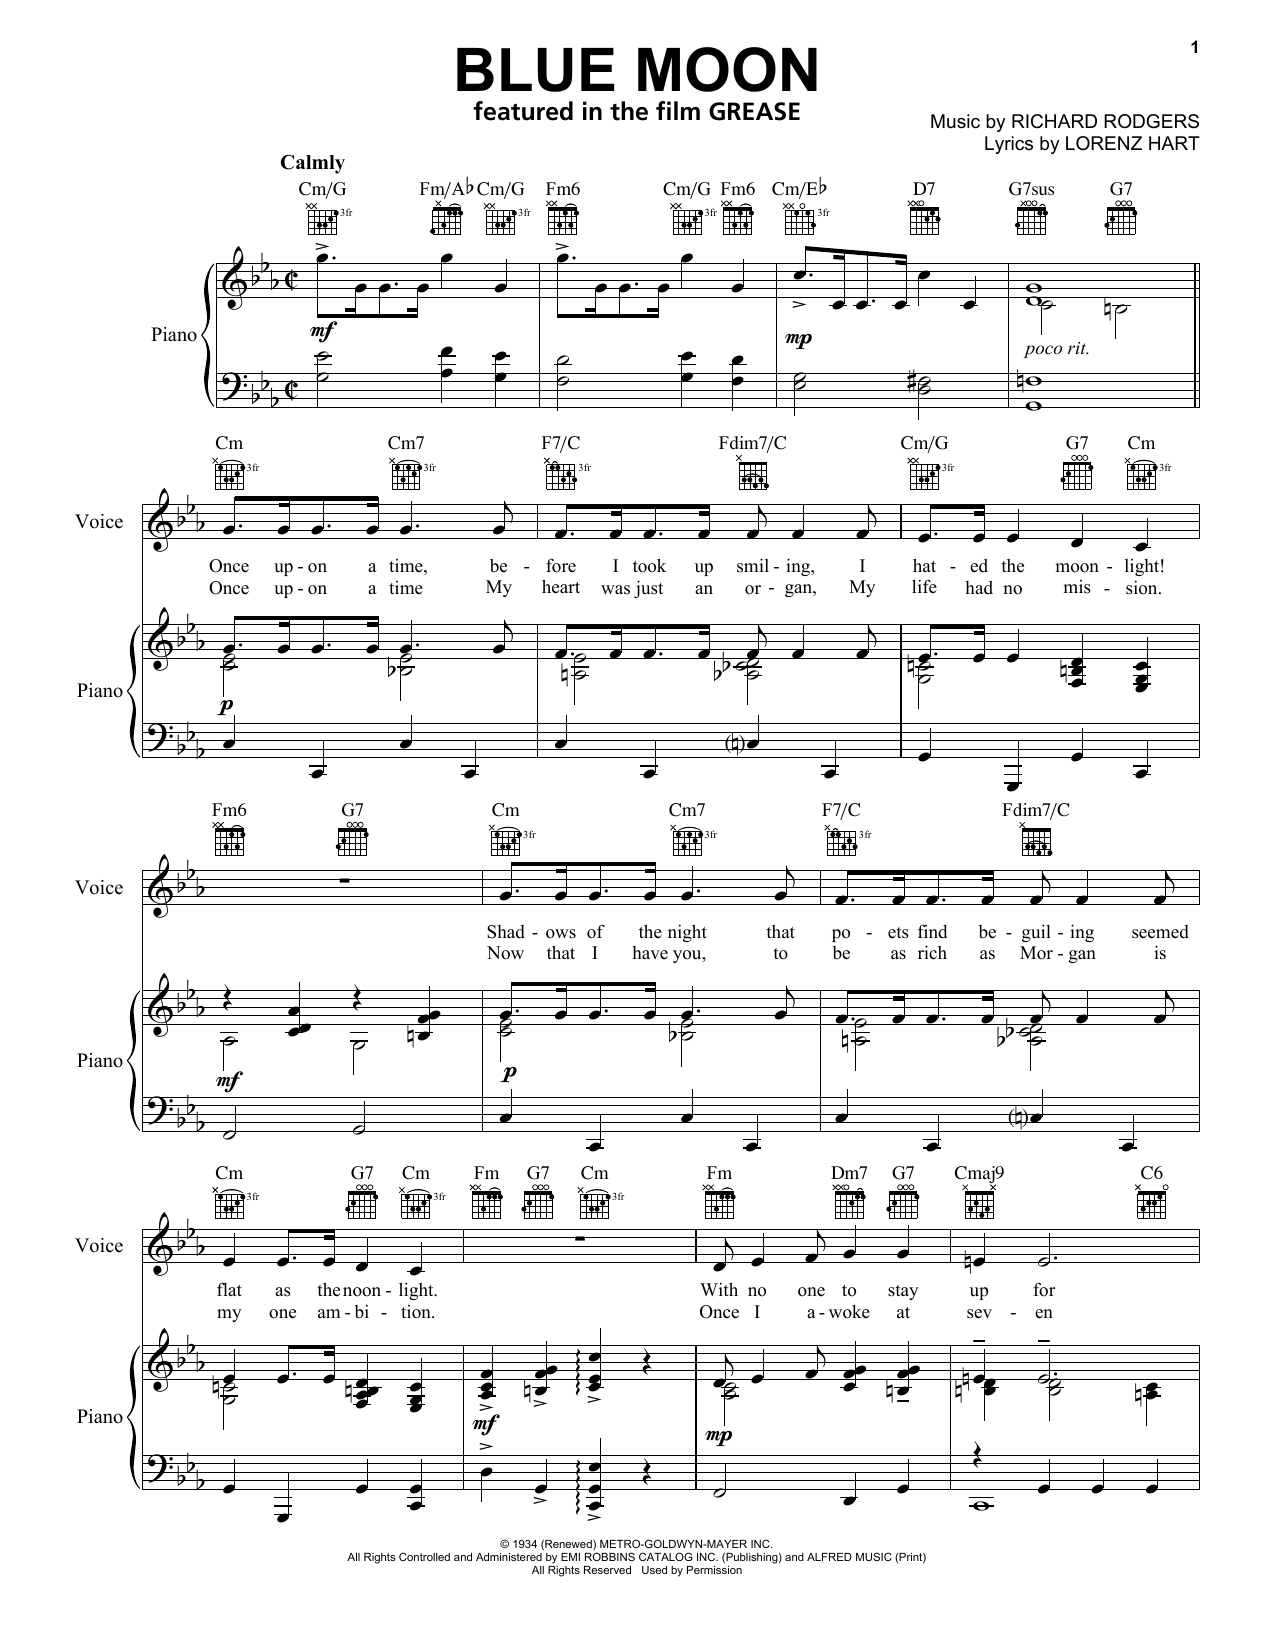 Elvis Presley Blue Moon Sheet Music Notes & Chords for Keyboard - Download or Print PDF